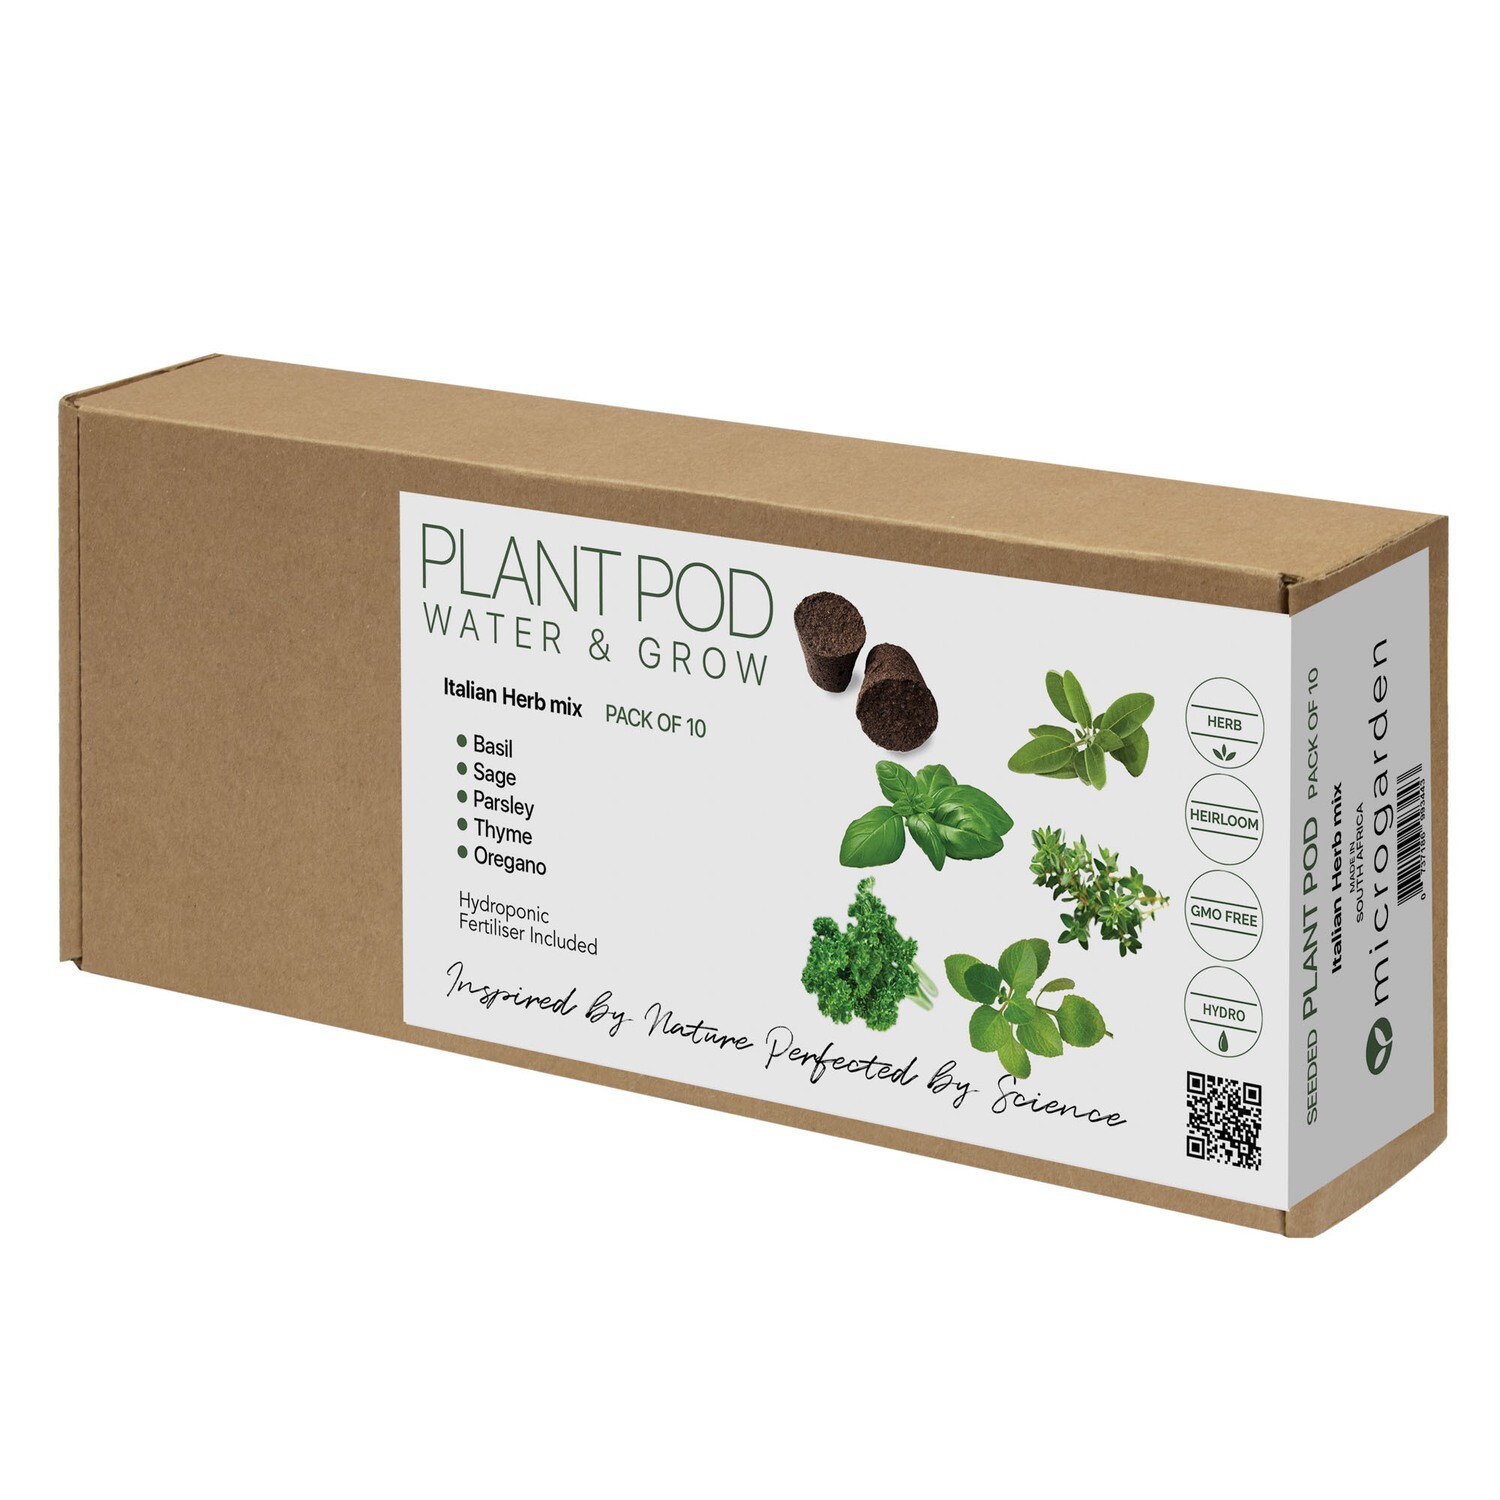 Italian Herb Mix Plant Pod Pack of 10